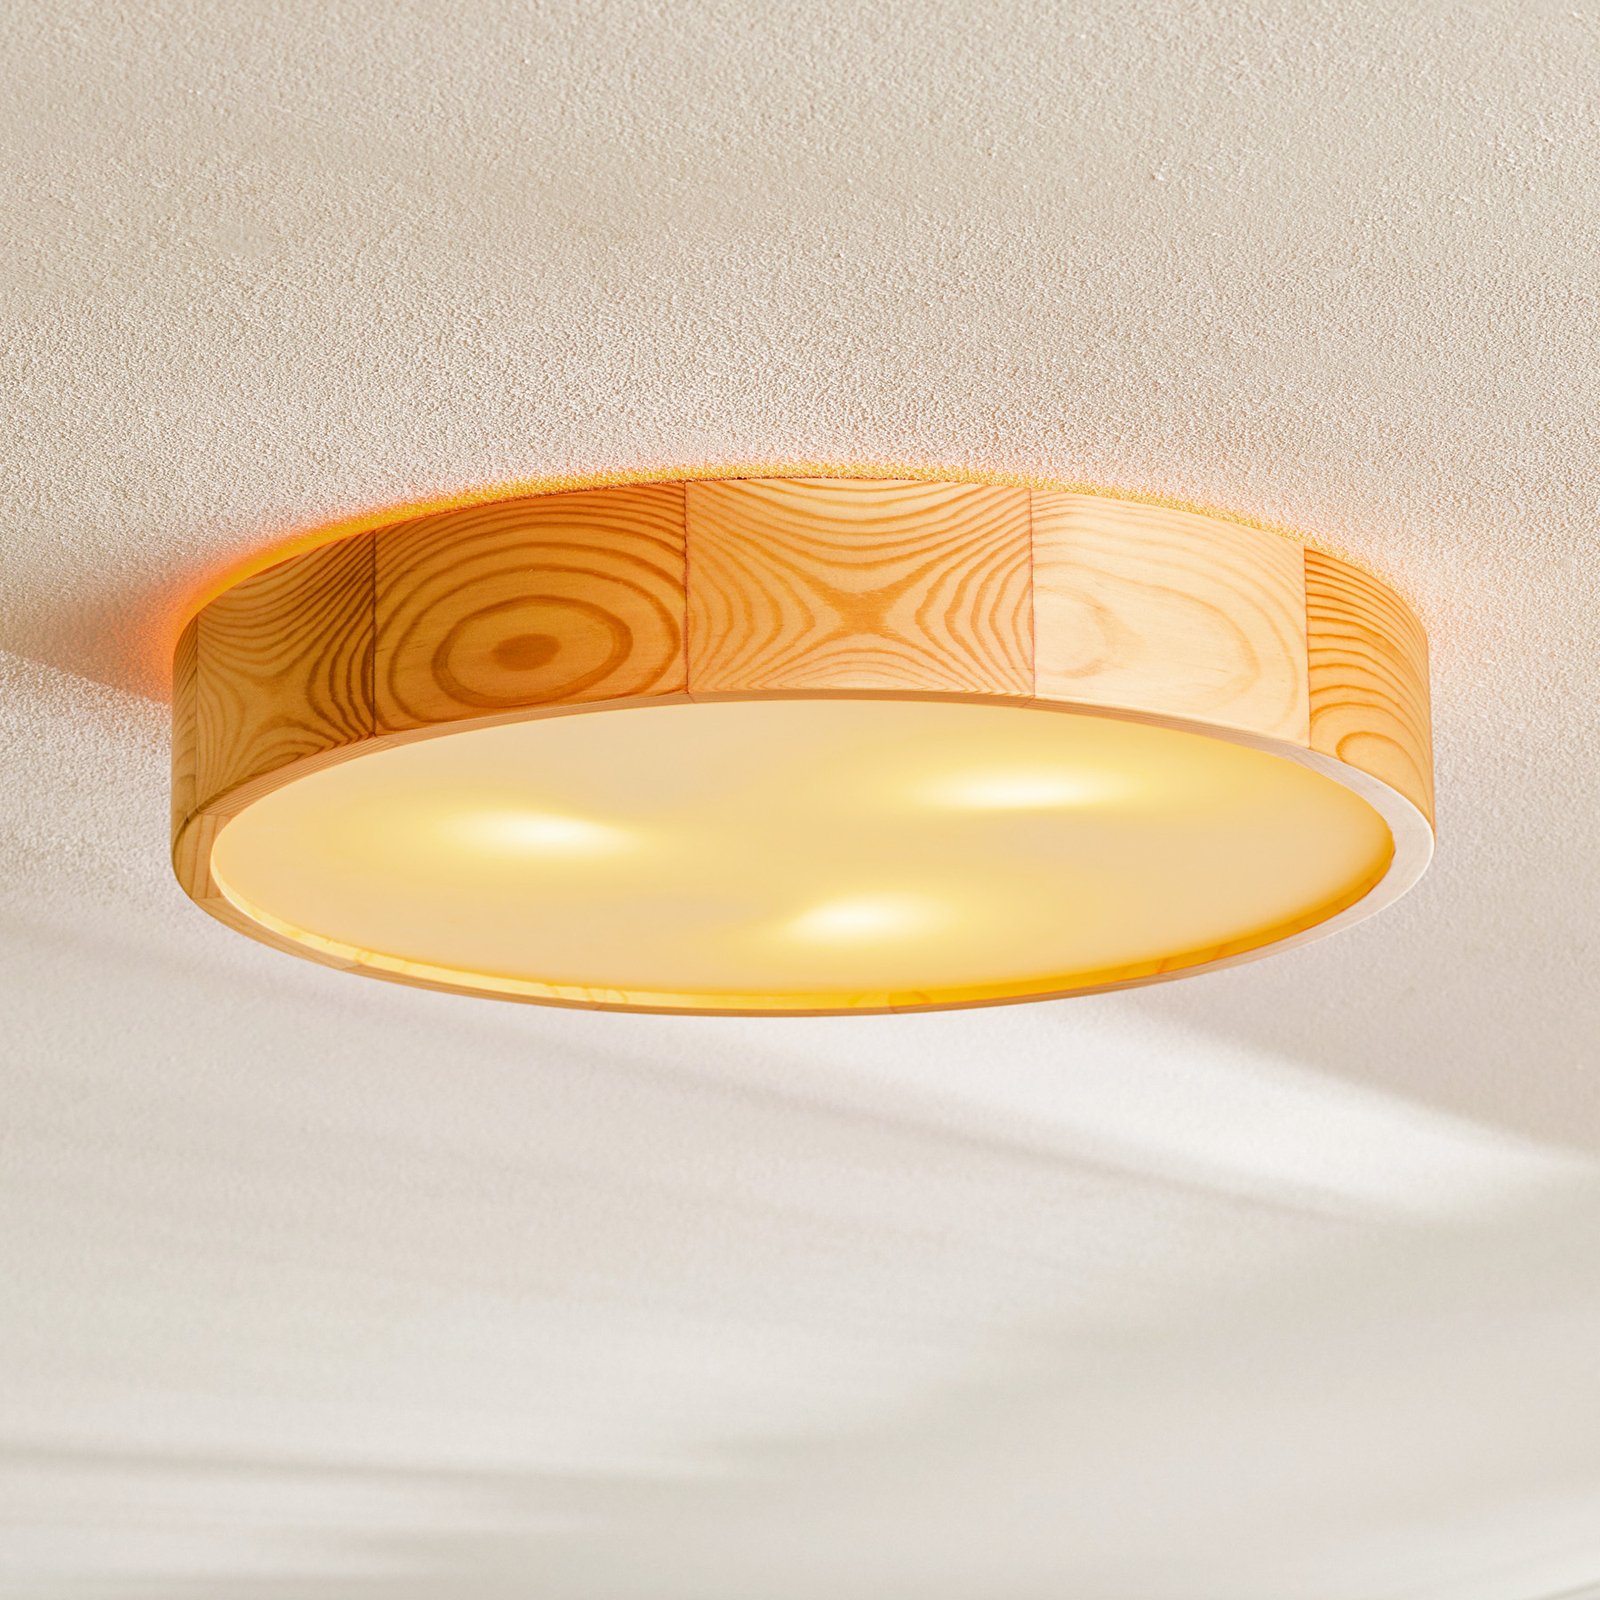 Cleo ceiling light made of pine wood, Ø 47.5 cm